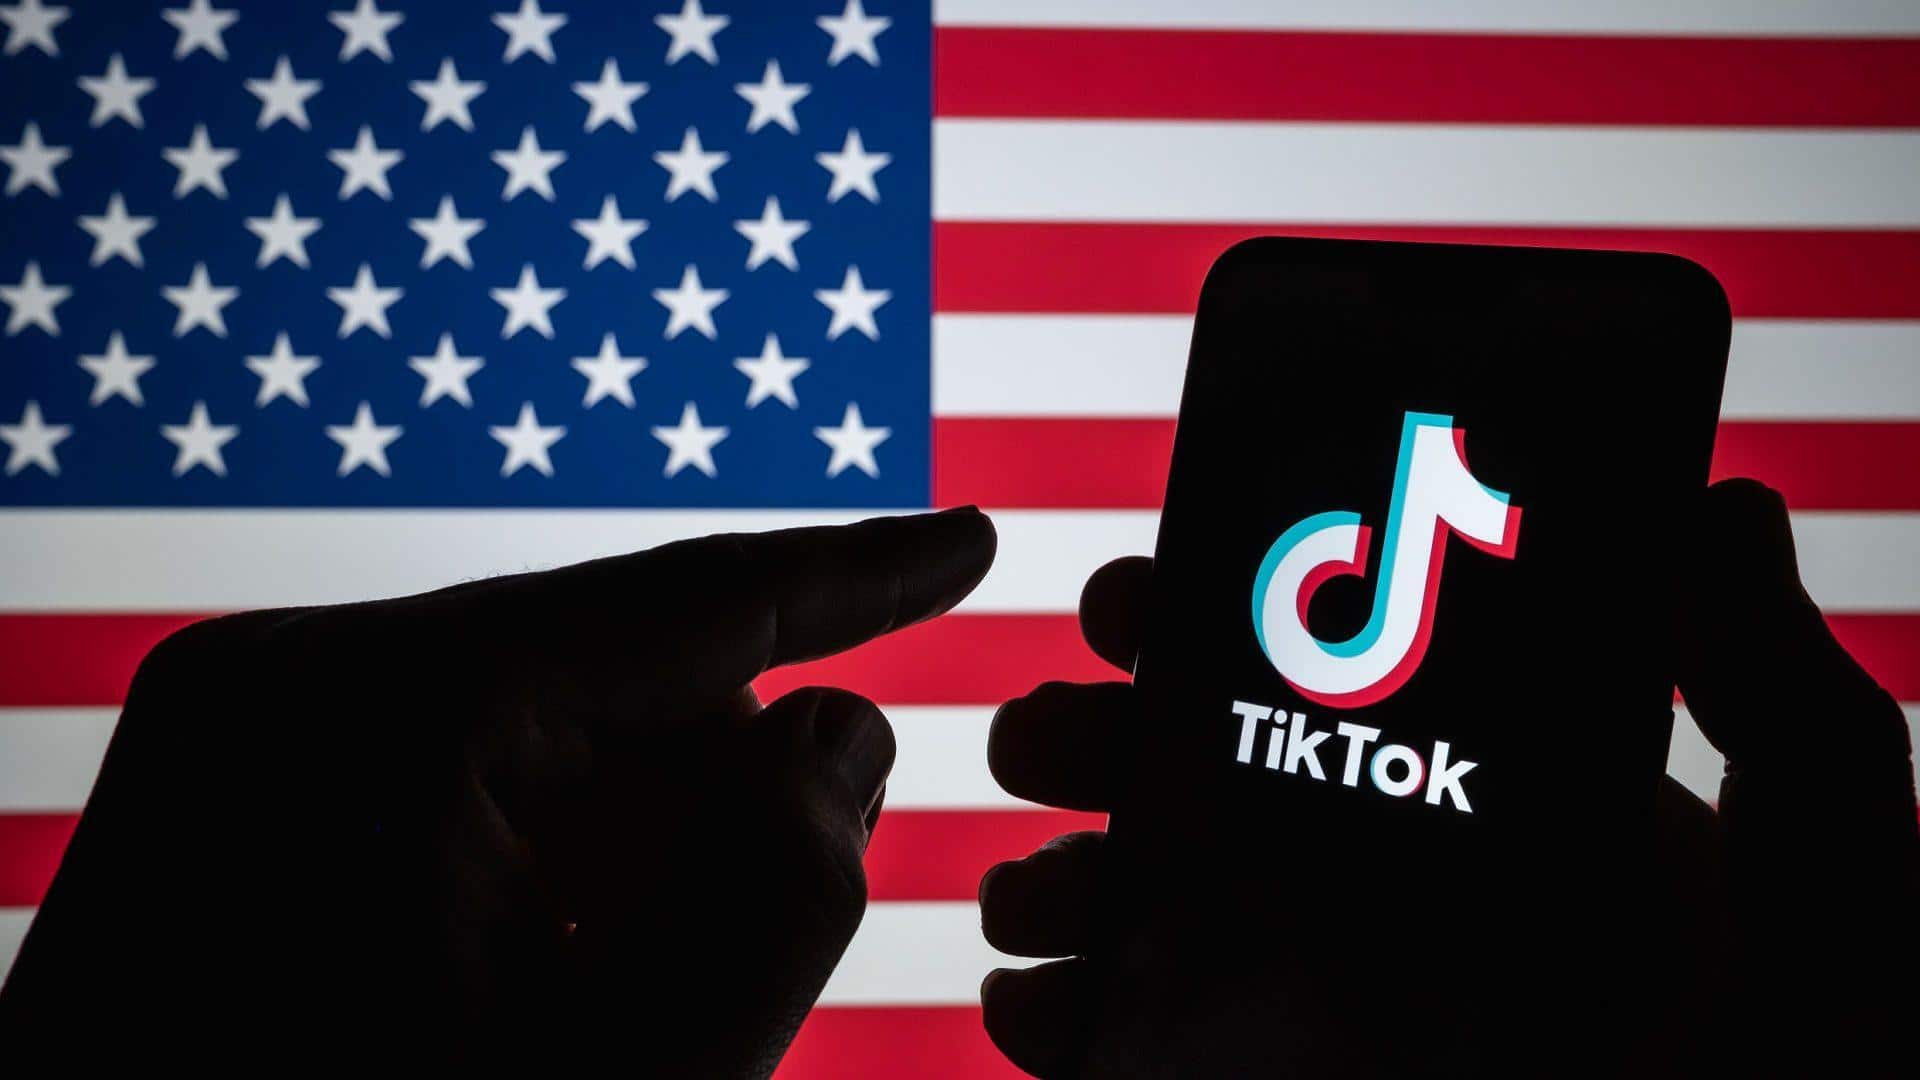 US legislators continue to advocate for TikTok's sale or ban